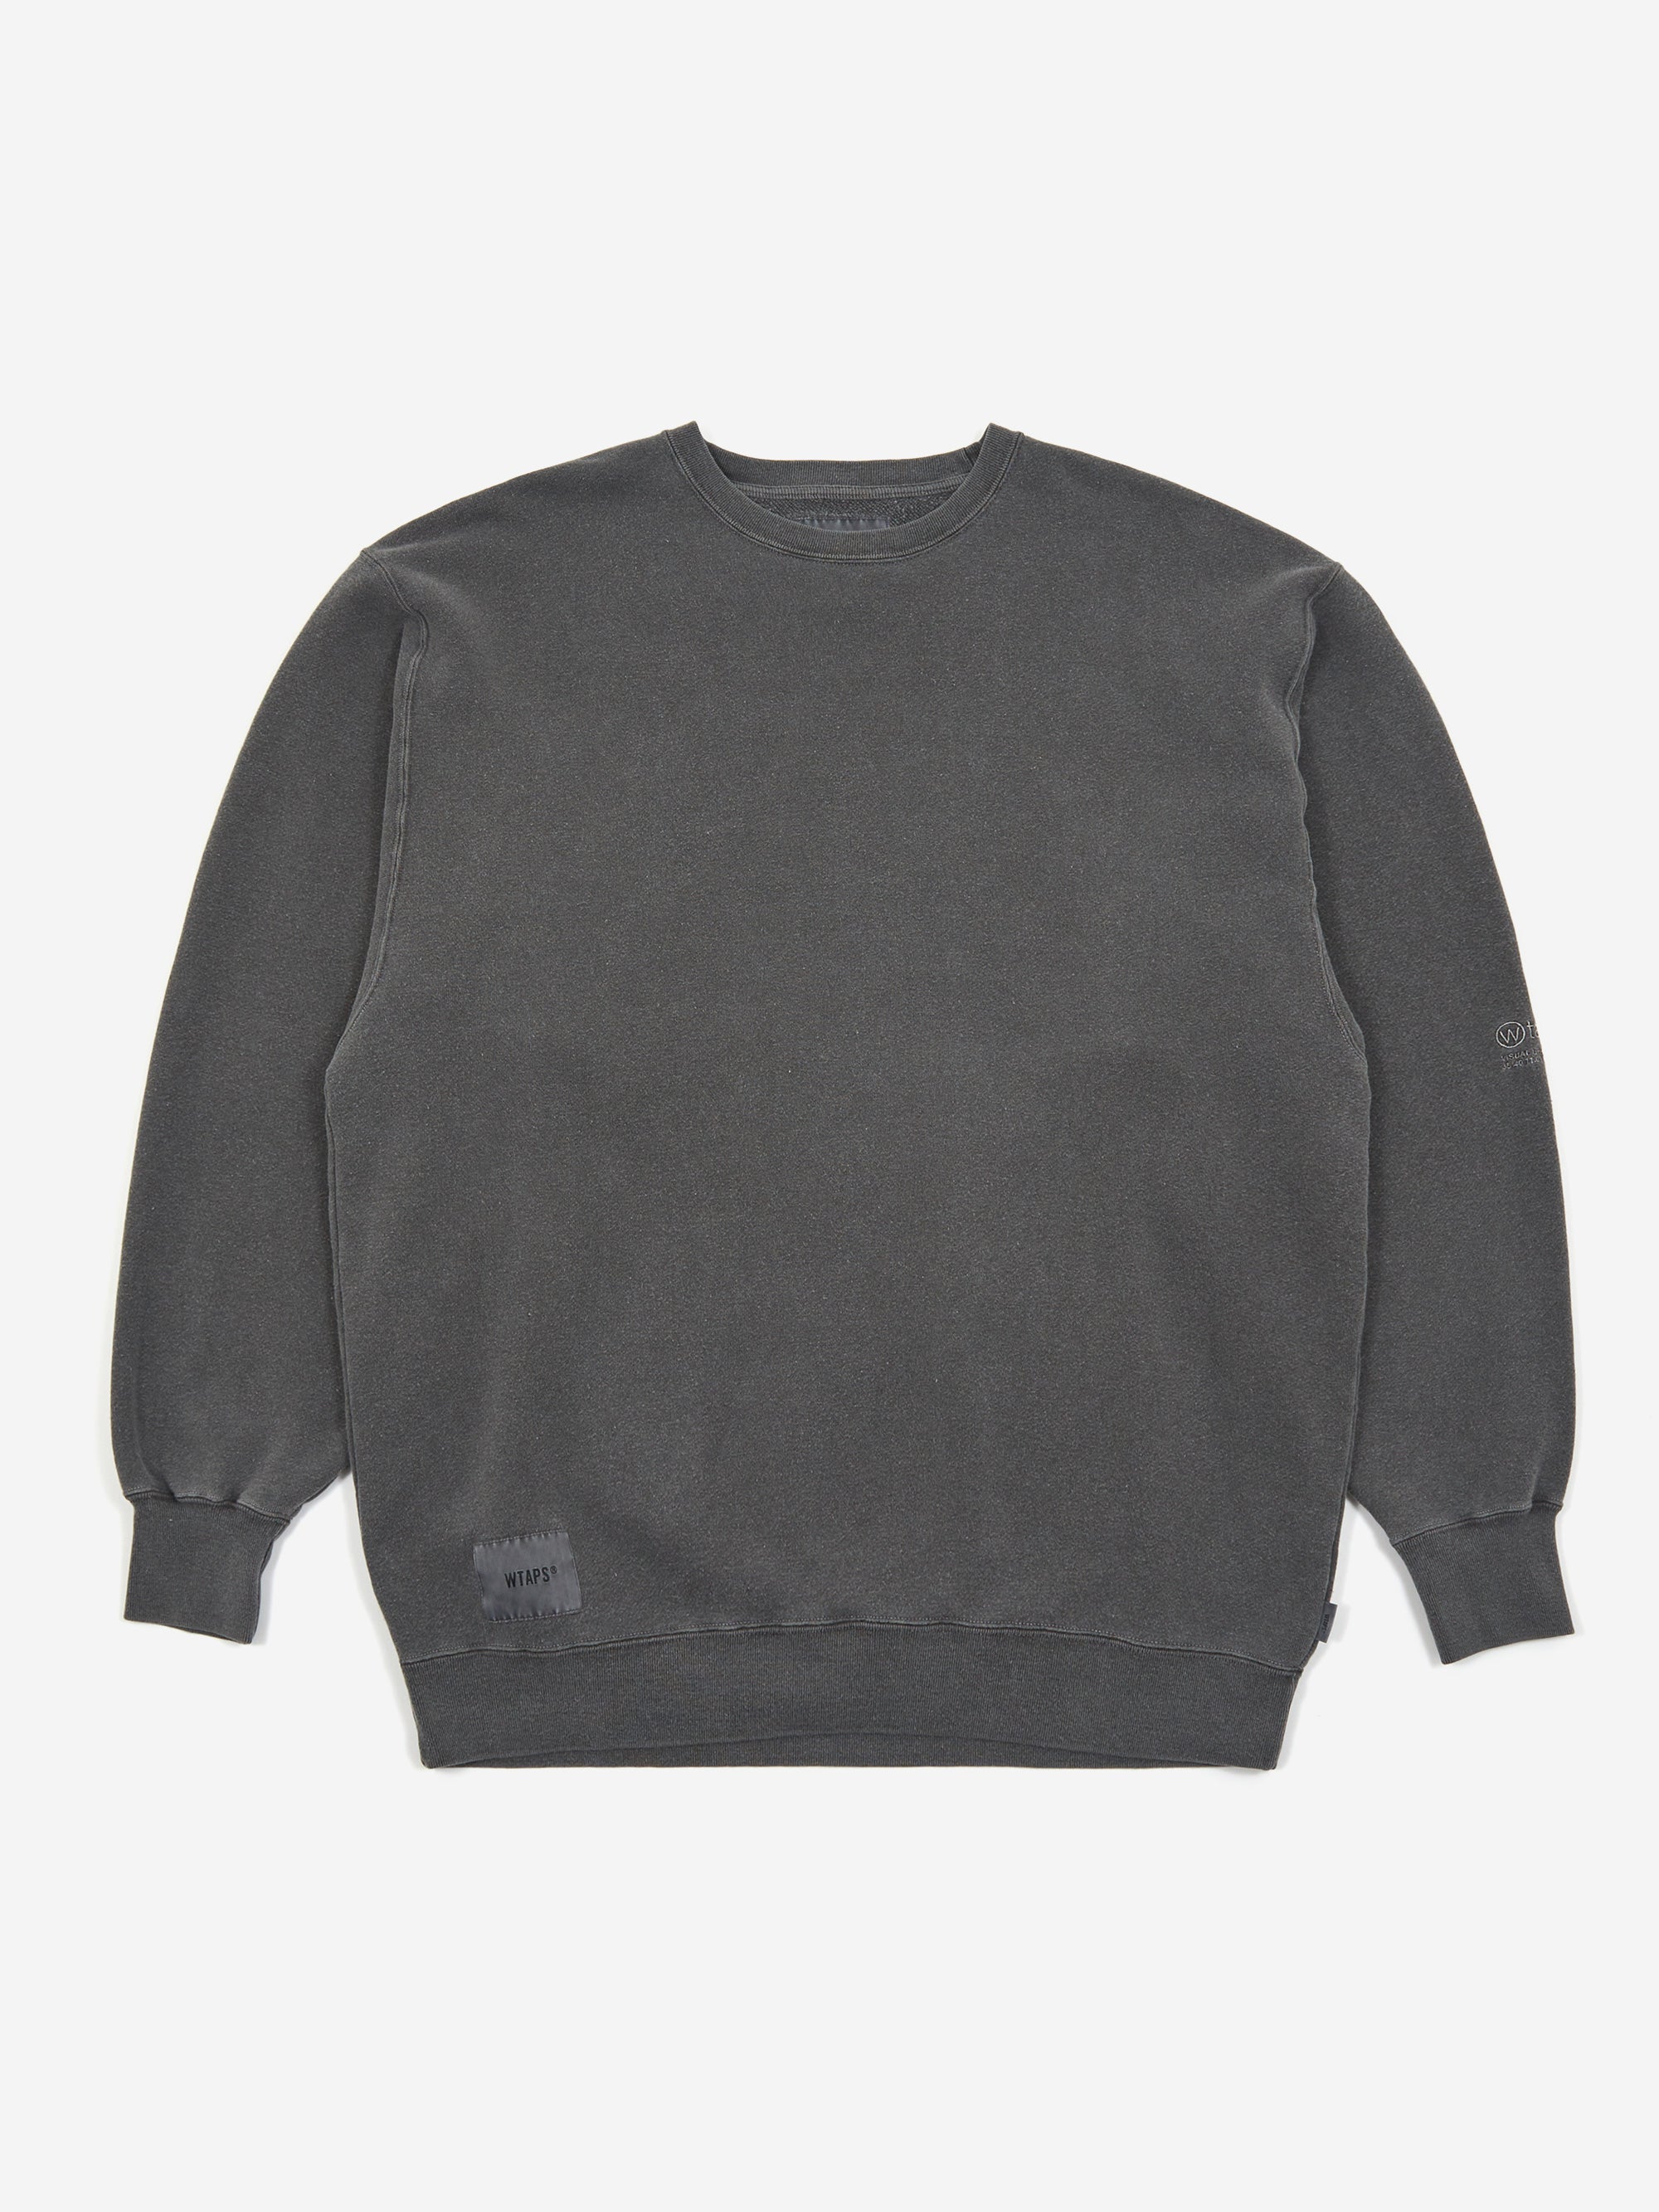 WTAPS Birth / Sweater / Cotton - Black